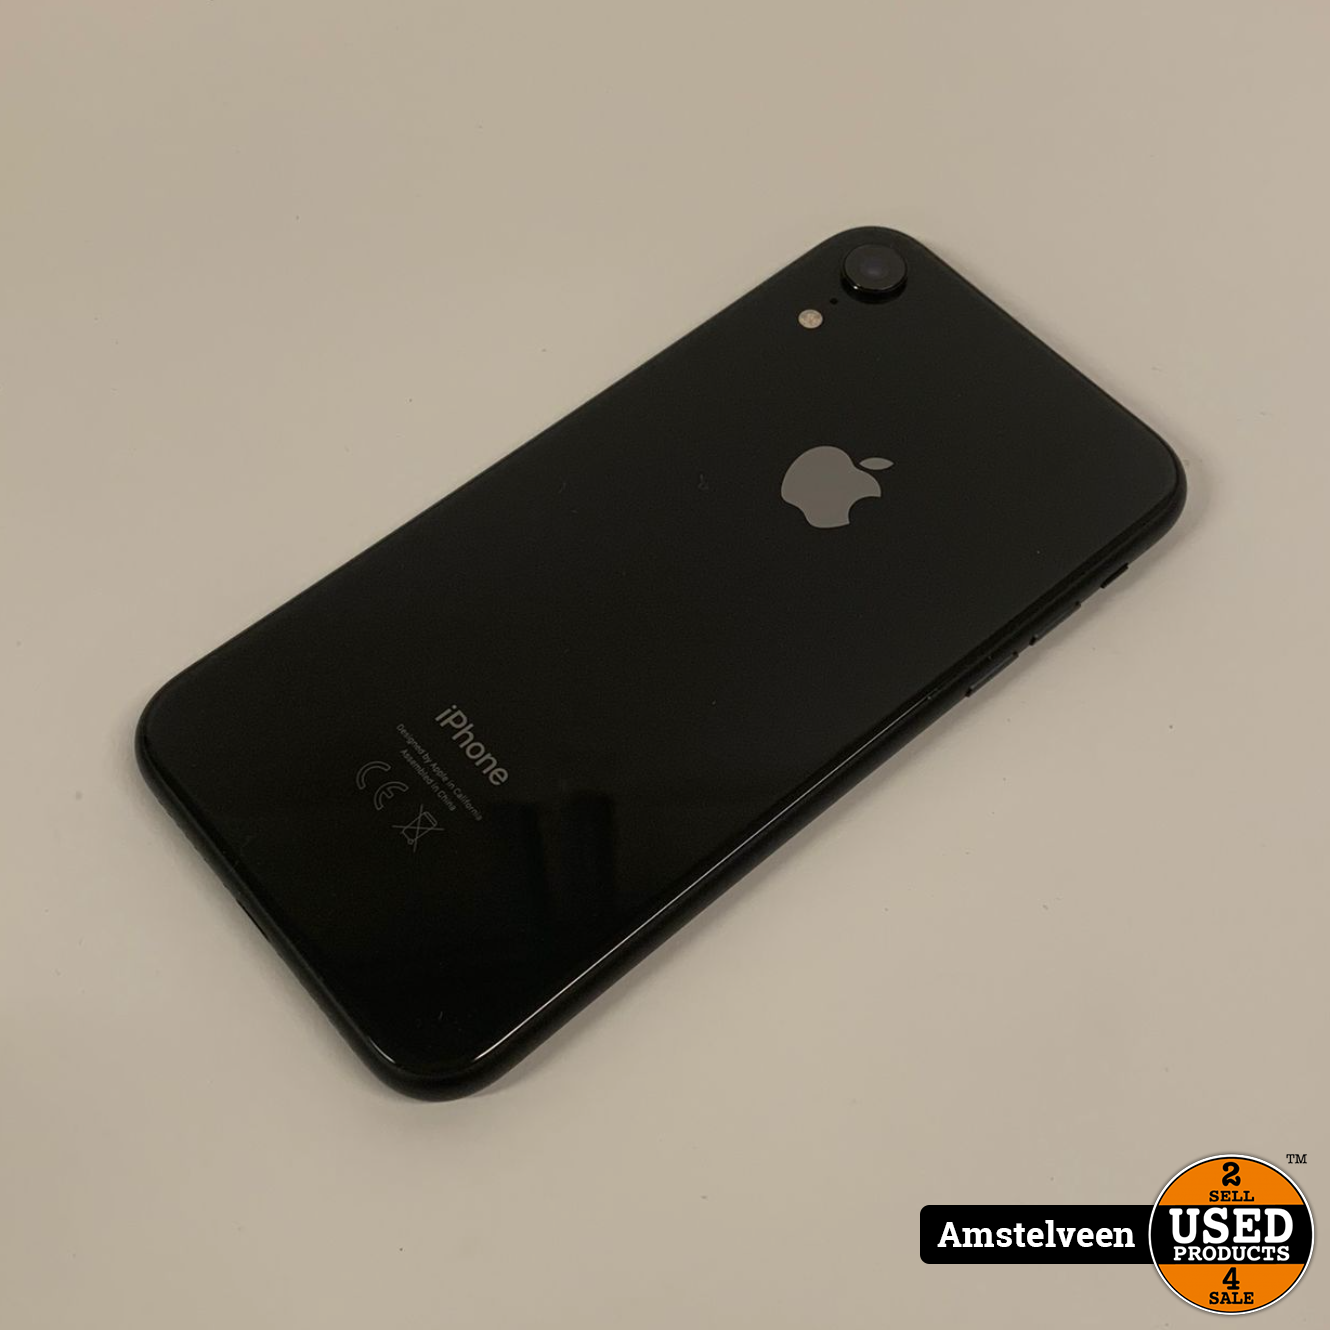 Gezag inrichting typist apple iPhone Xr 128GB Black | incl. Lader & Garantie - Used Products  Amstelveen